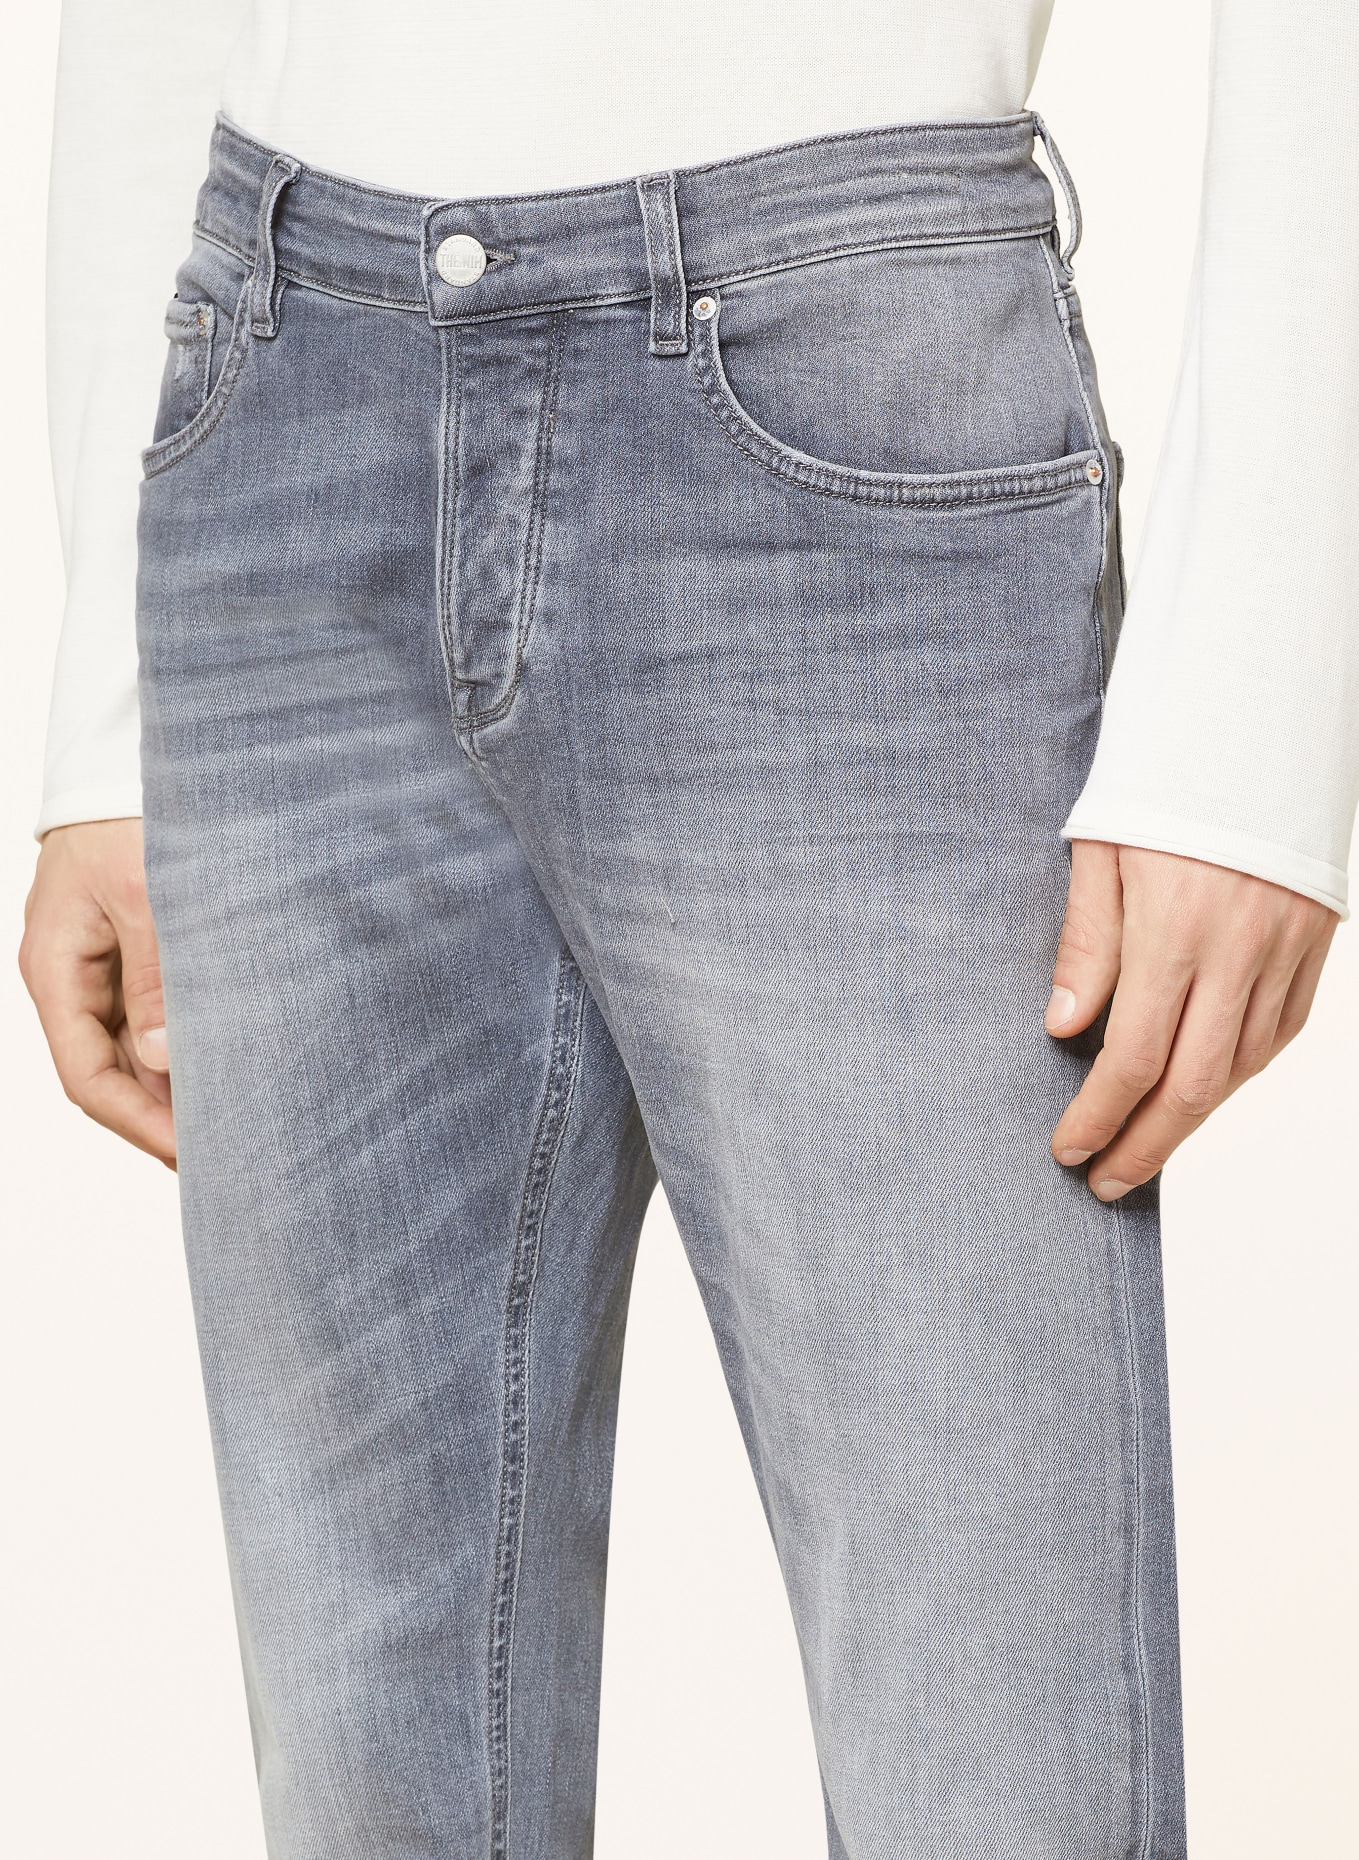 THE.NIM STANDARD Jeans MORRISON Tapered Slim Fit, Farbe: W718 GREY (Bild 5)